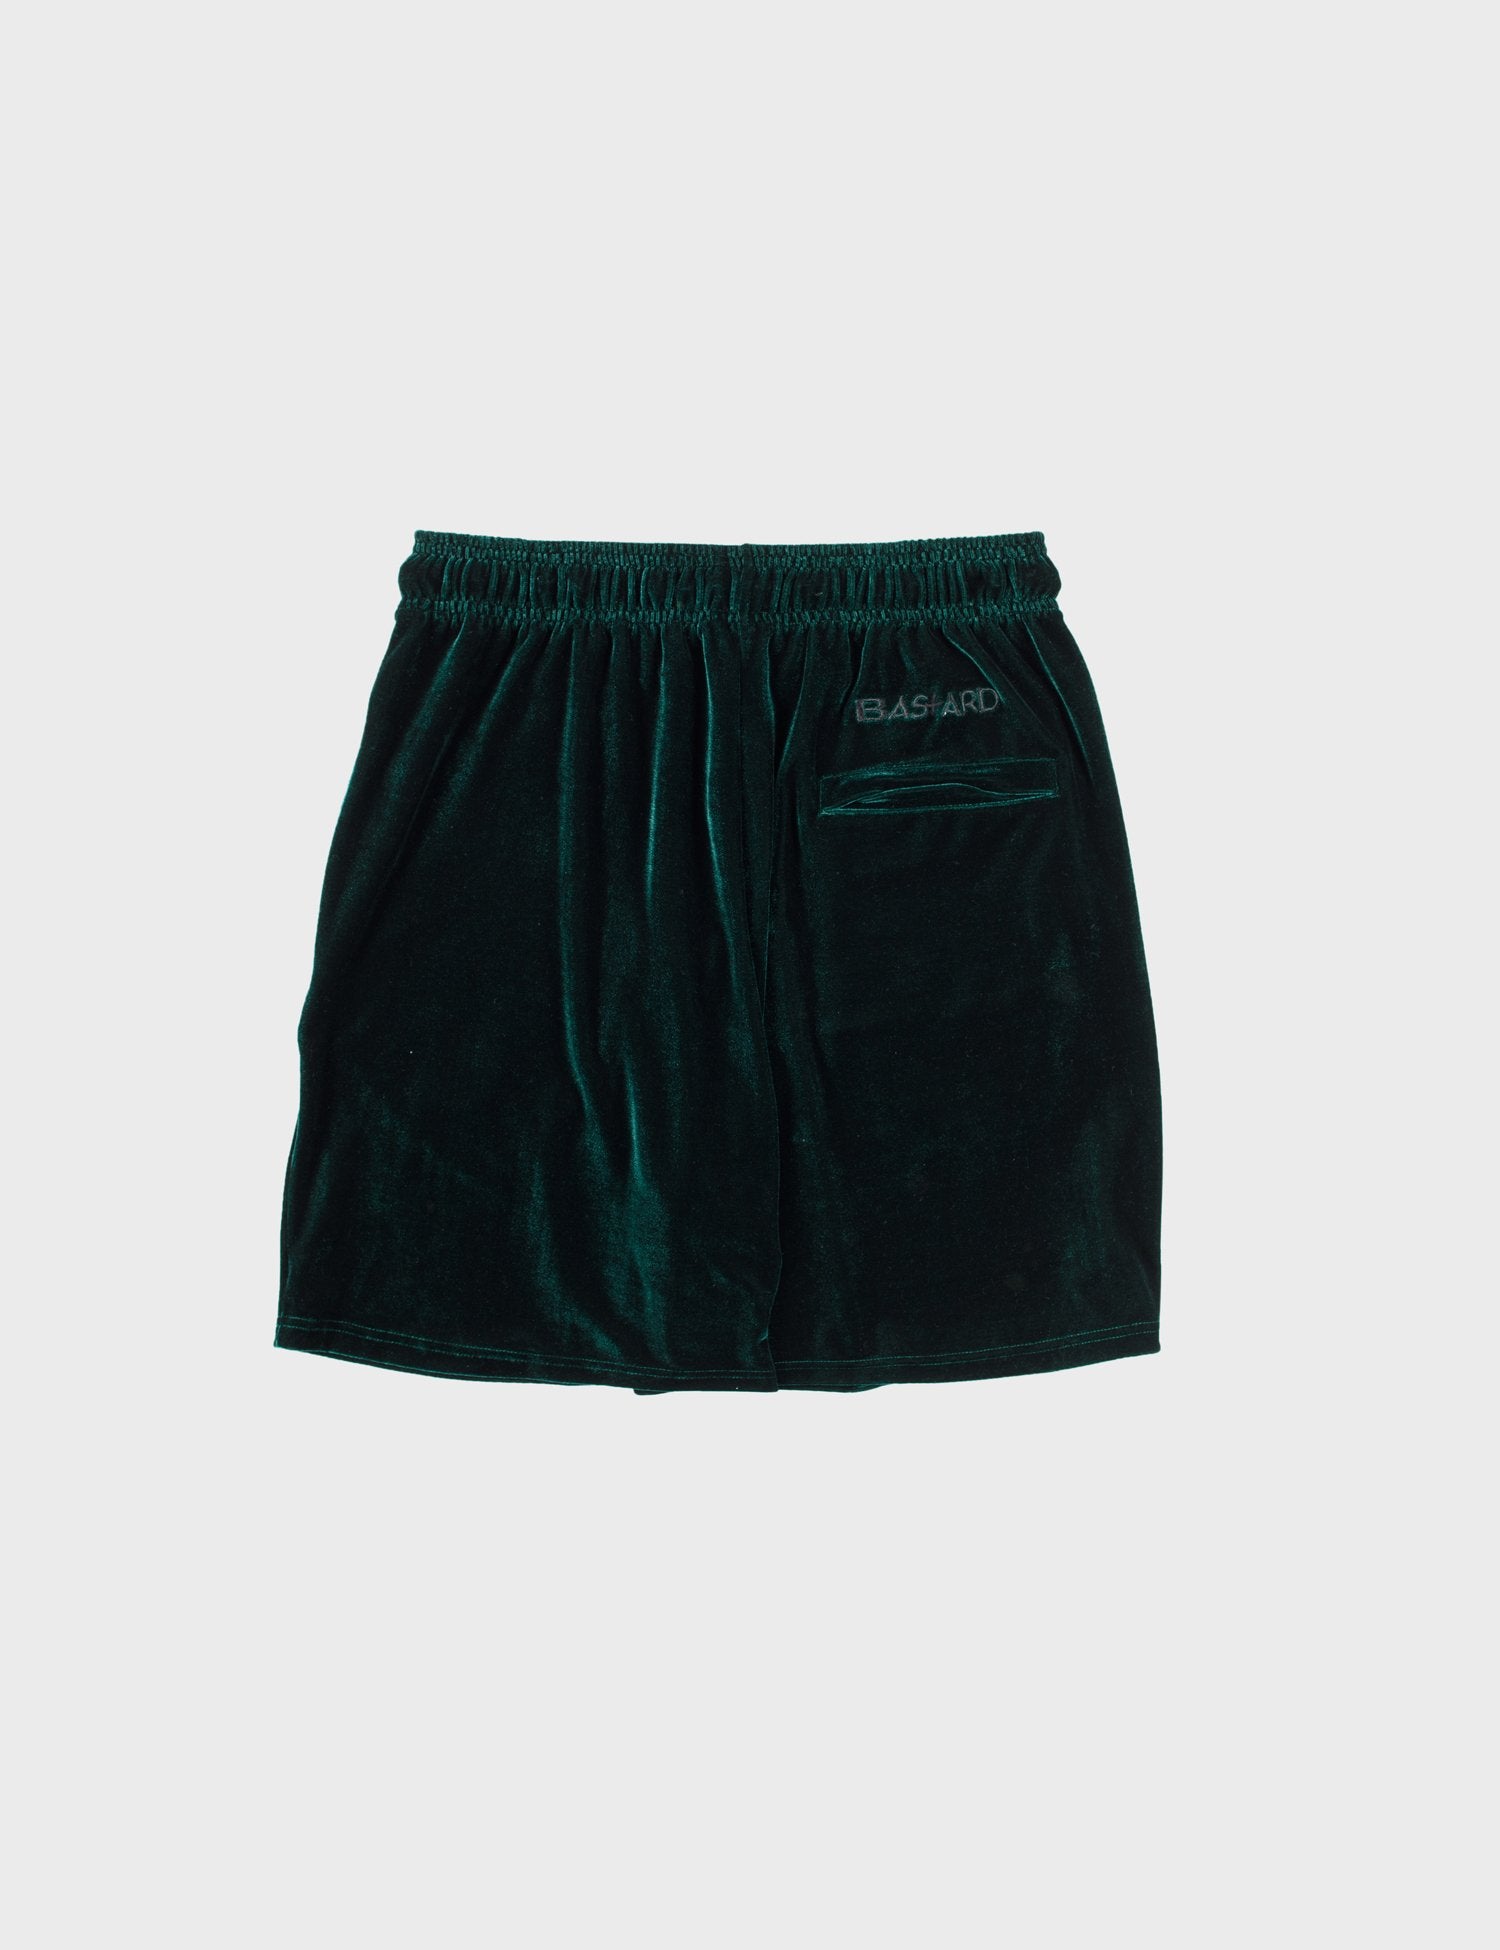 Green Velour Shorts